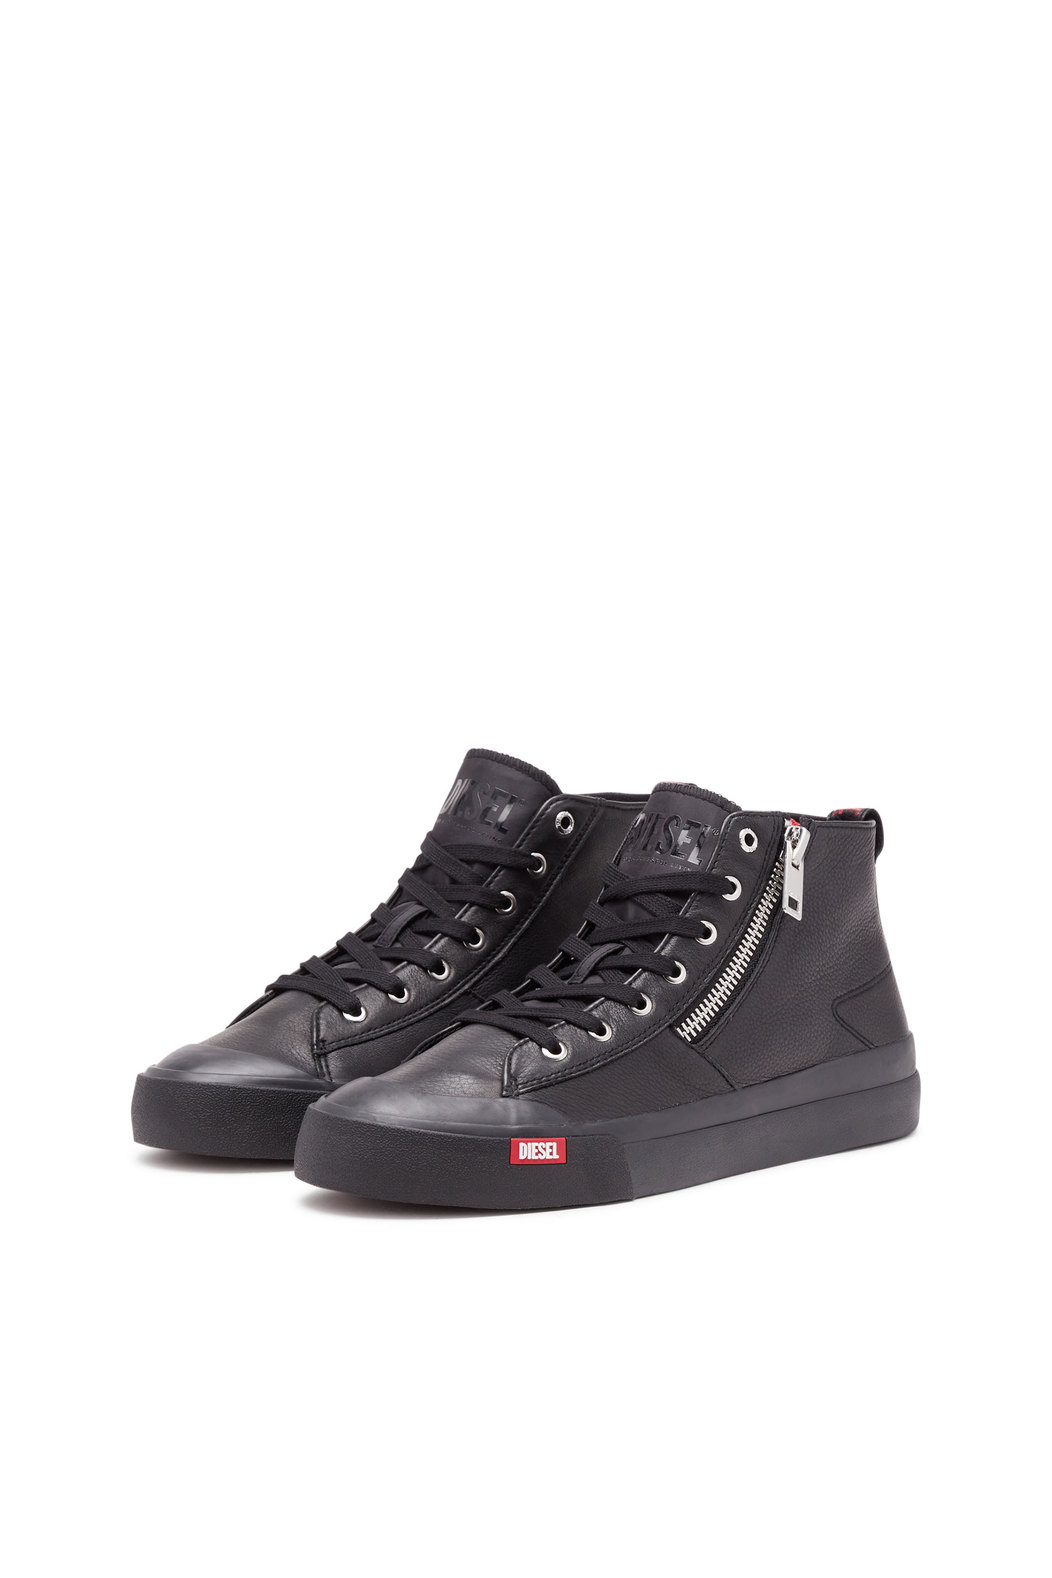 S-Athos Zip - High-top sneakers in premium leather